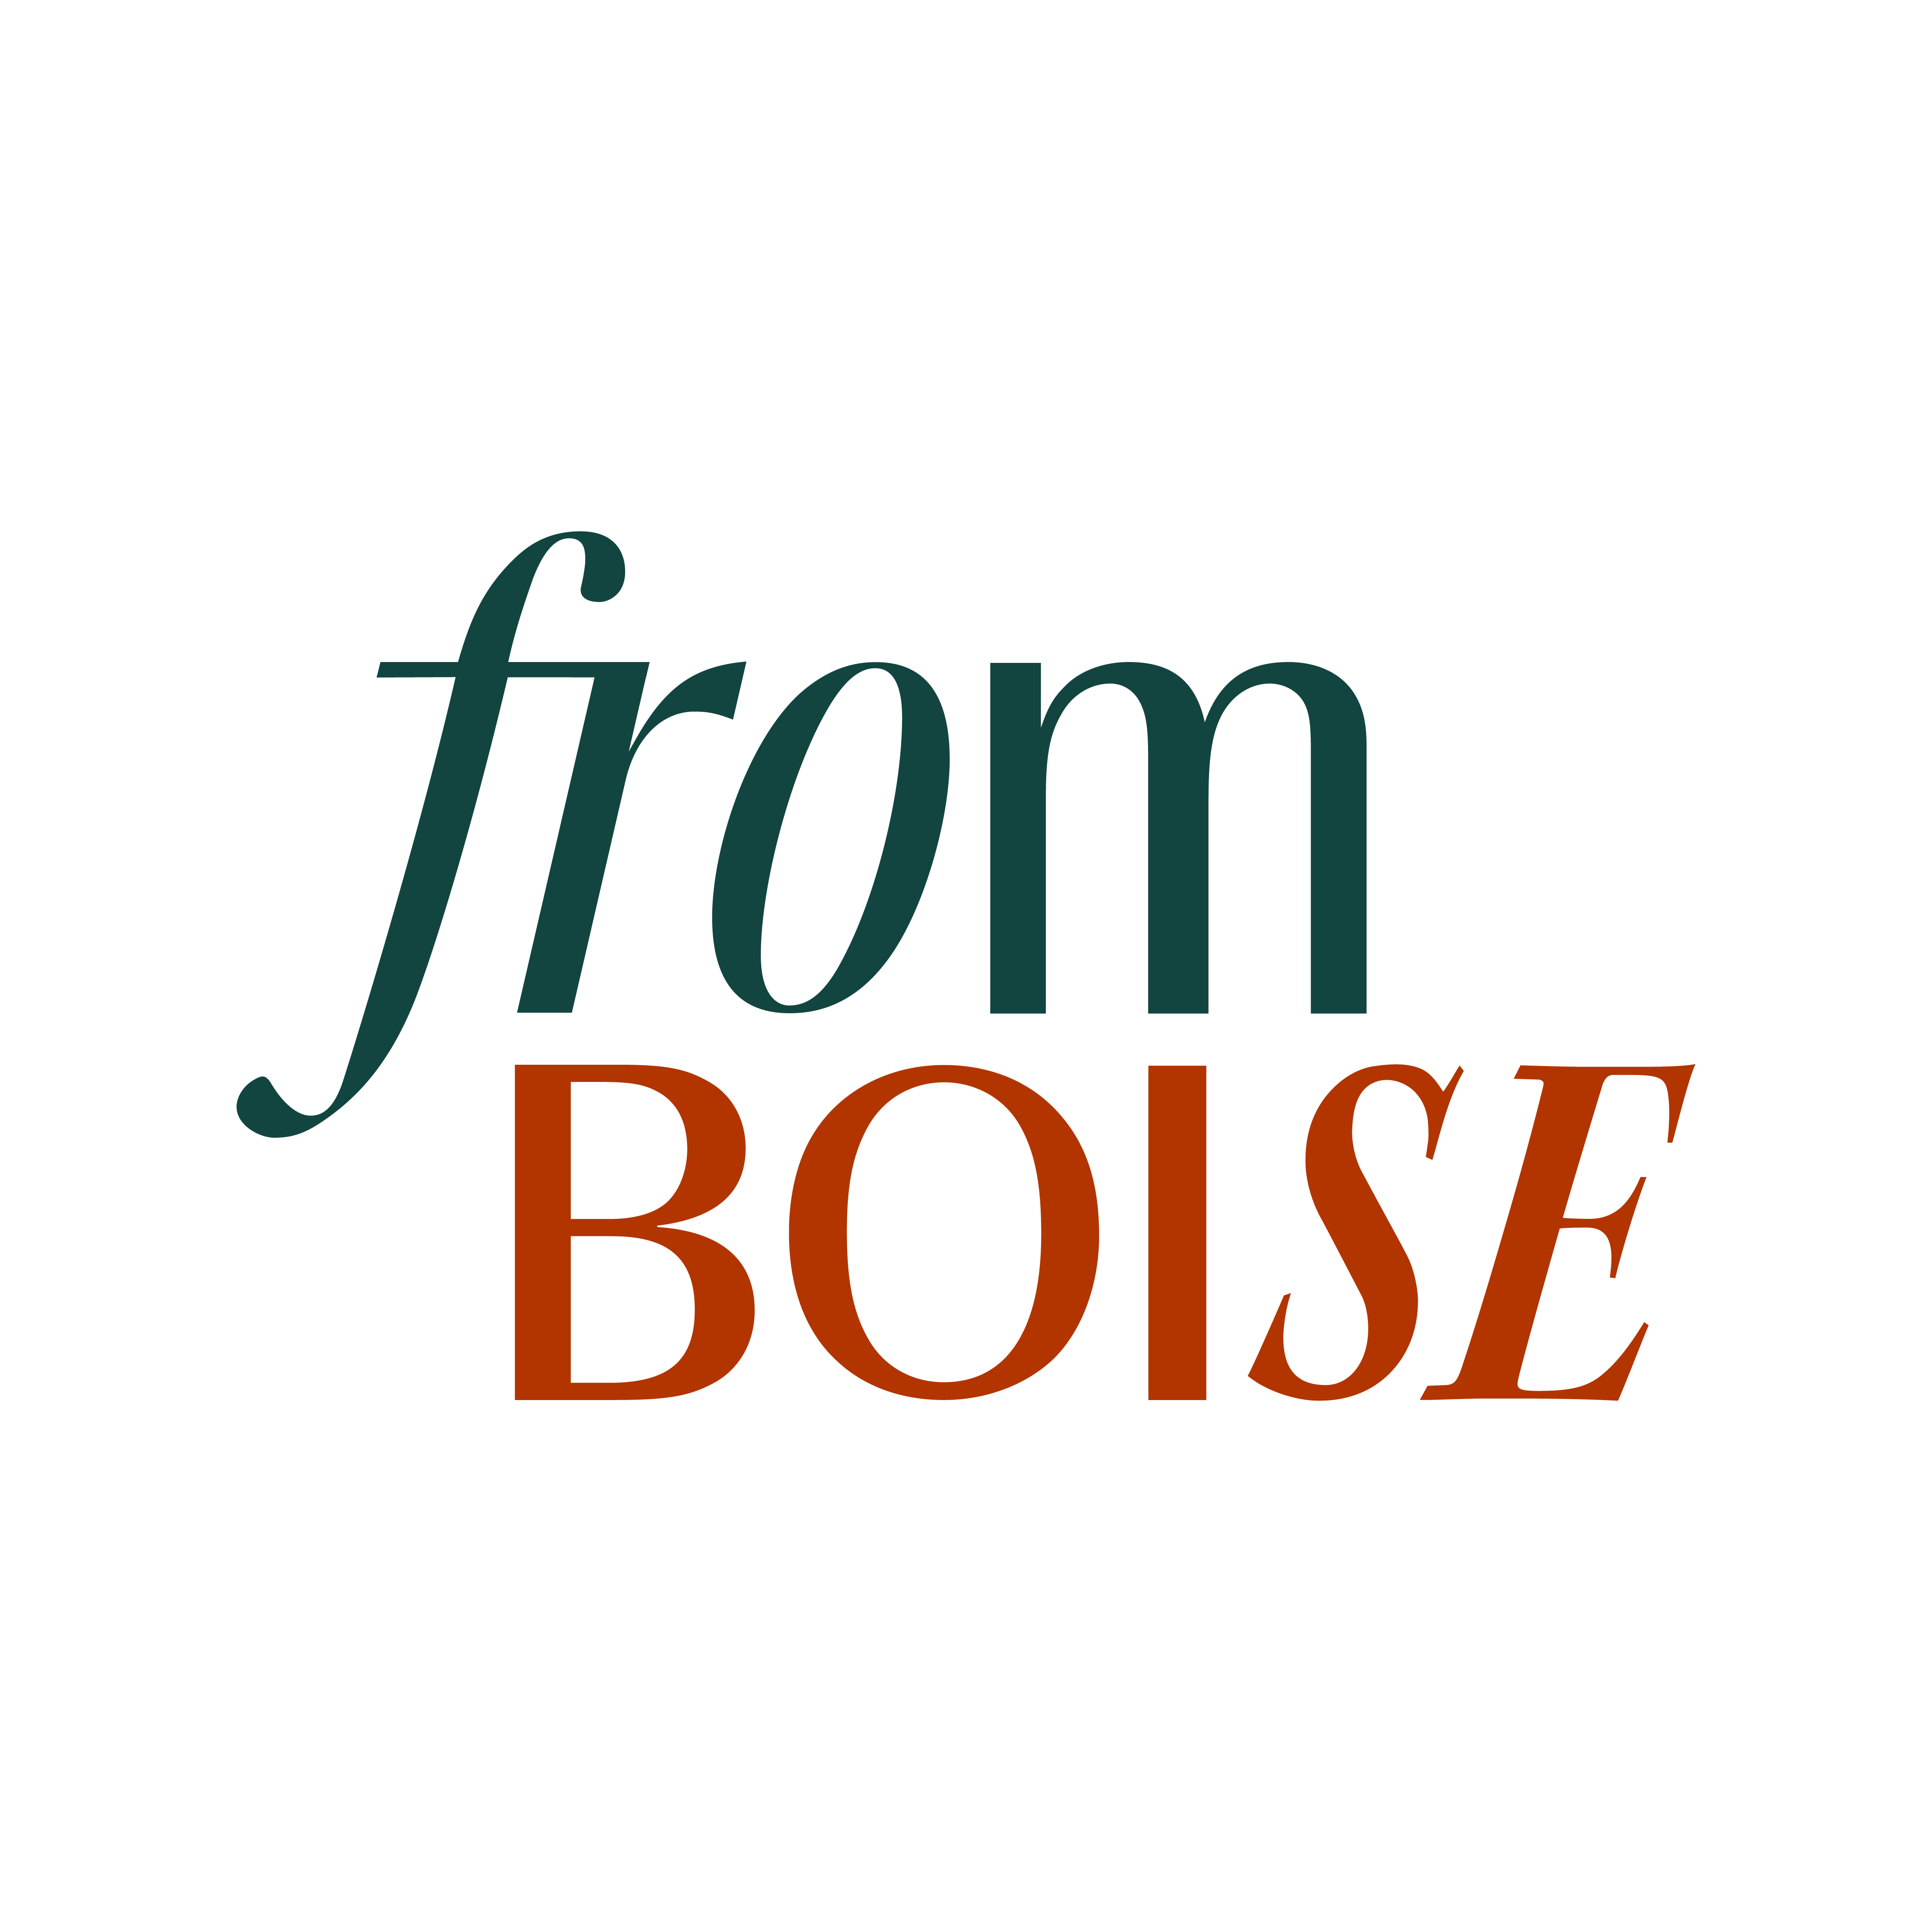 idaho — Blog — Boise Bucket List